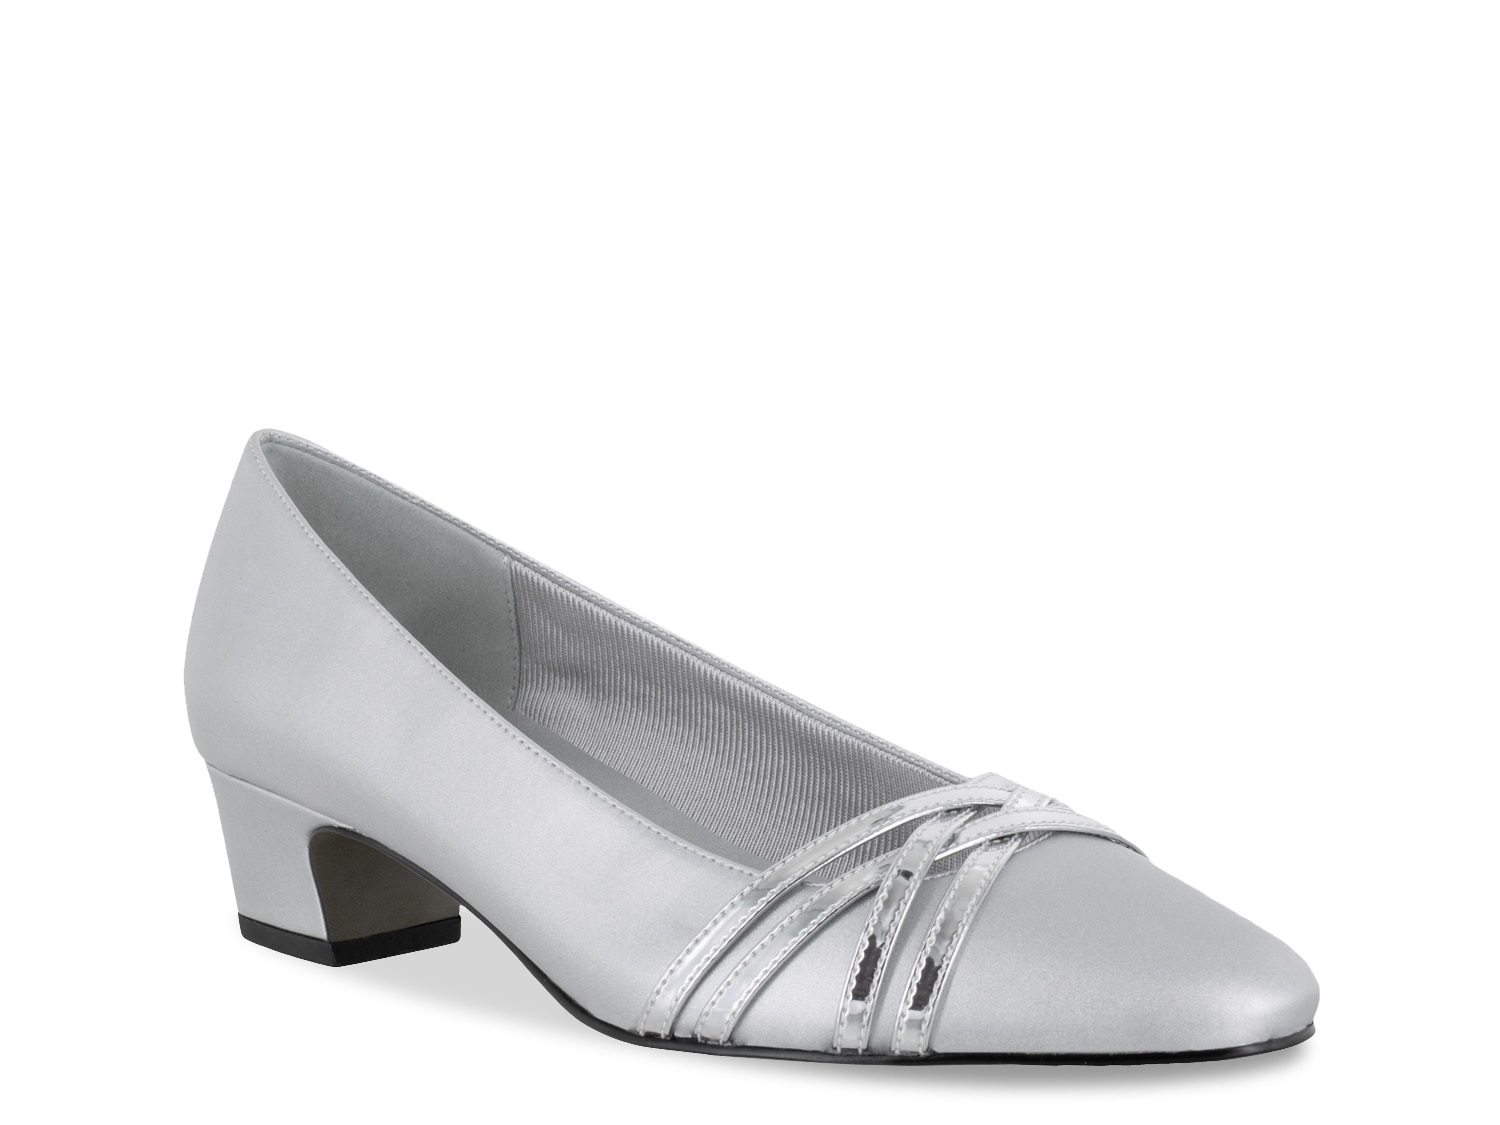 dsw silver dress shoes